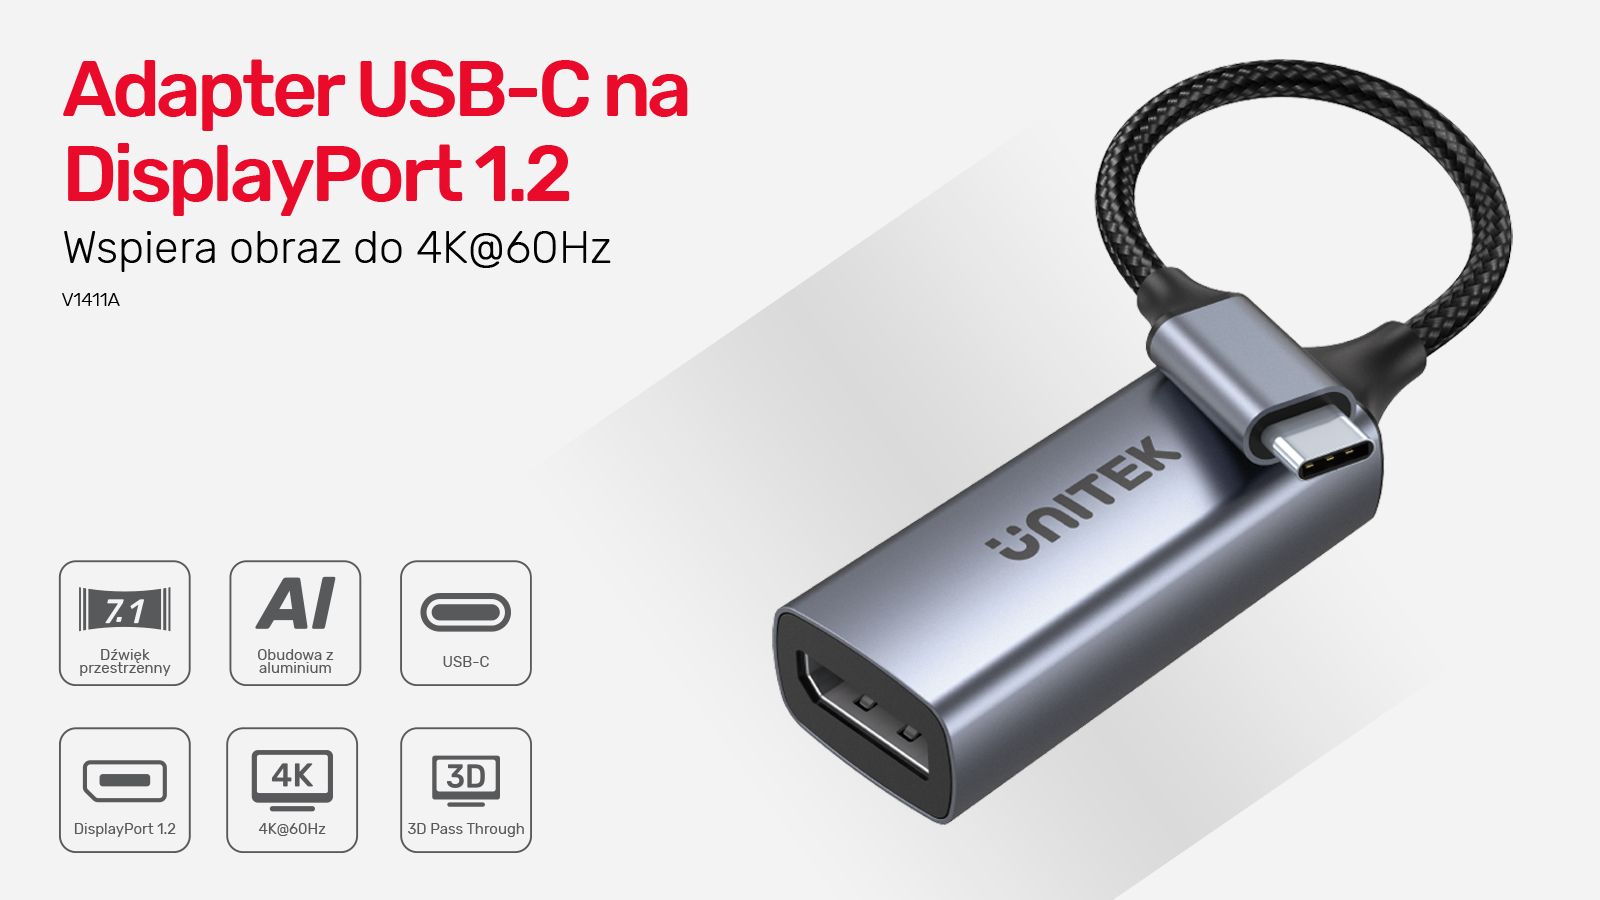 Adapter USB-C DisplayPort